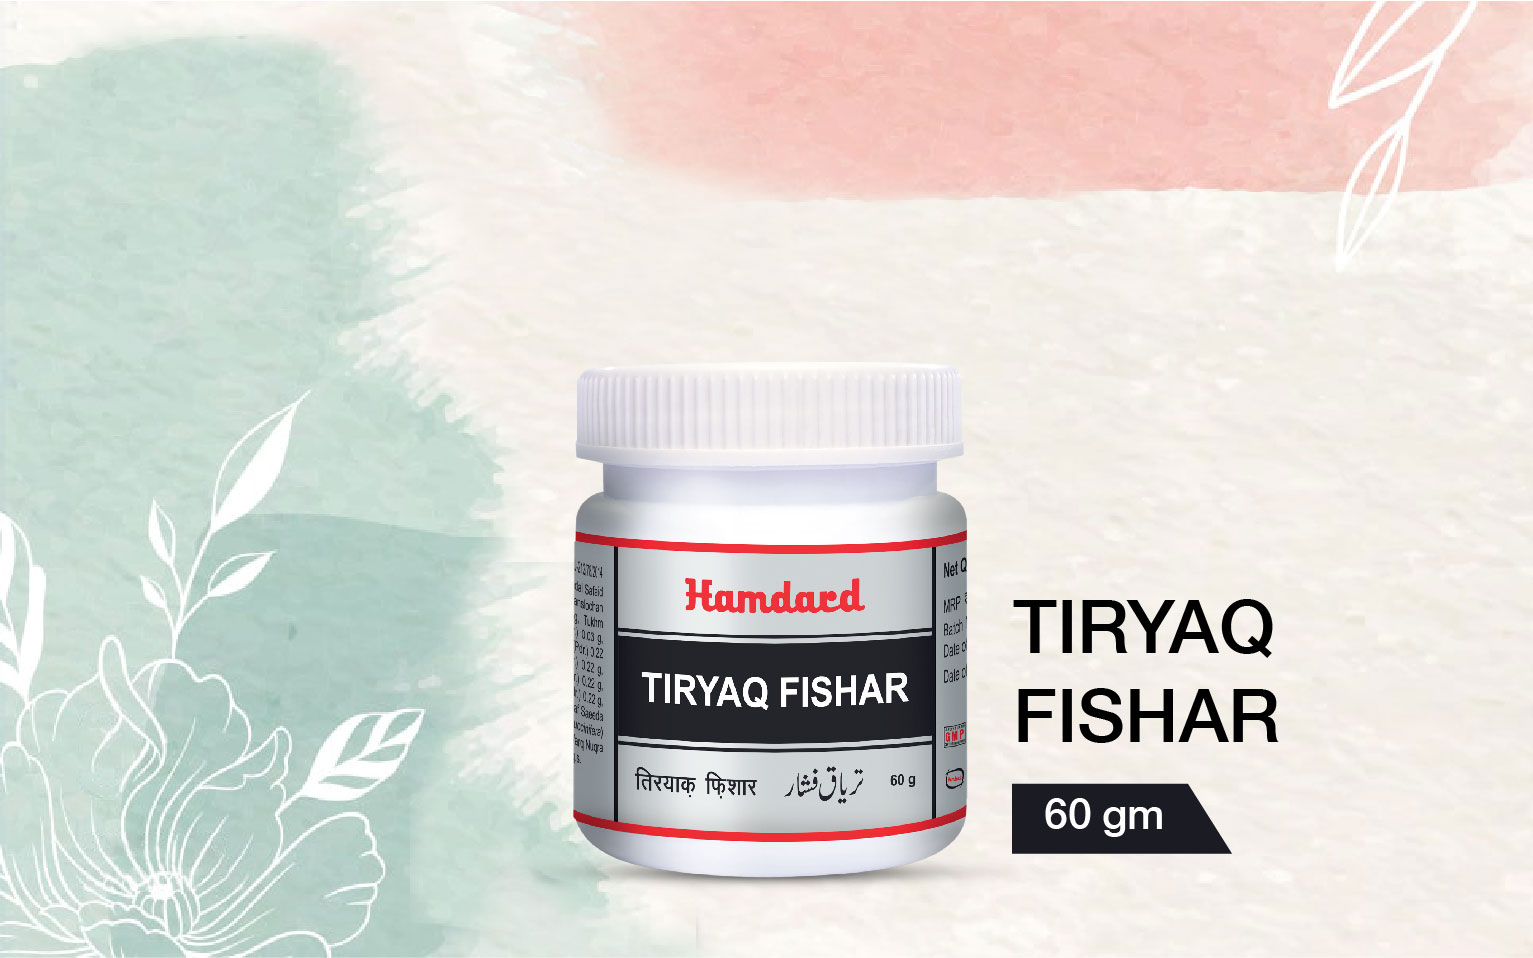 Tiryaq fishar